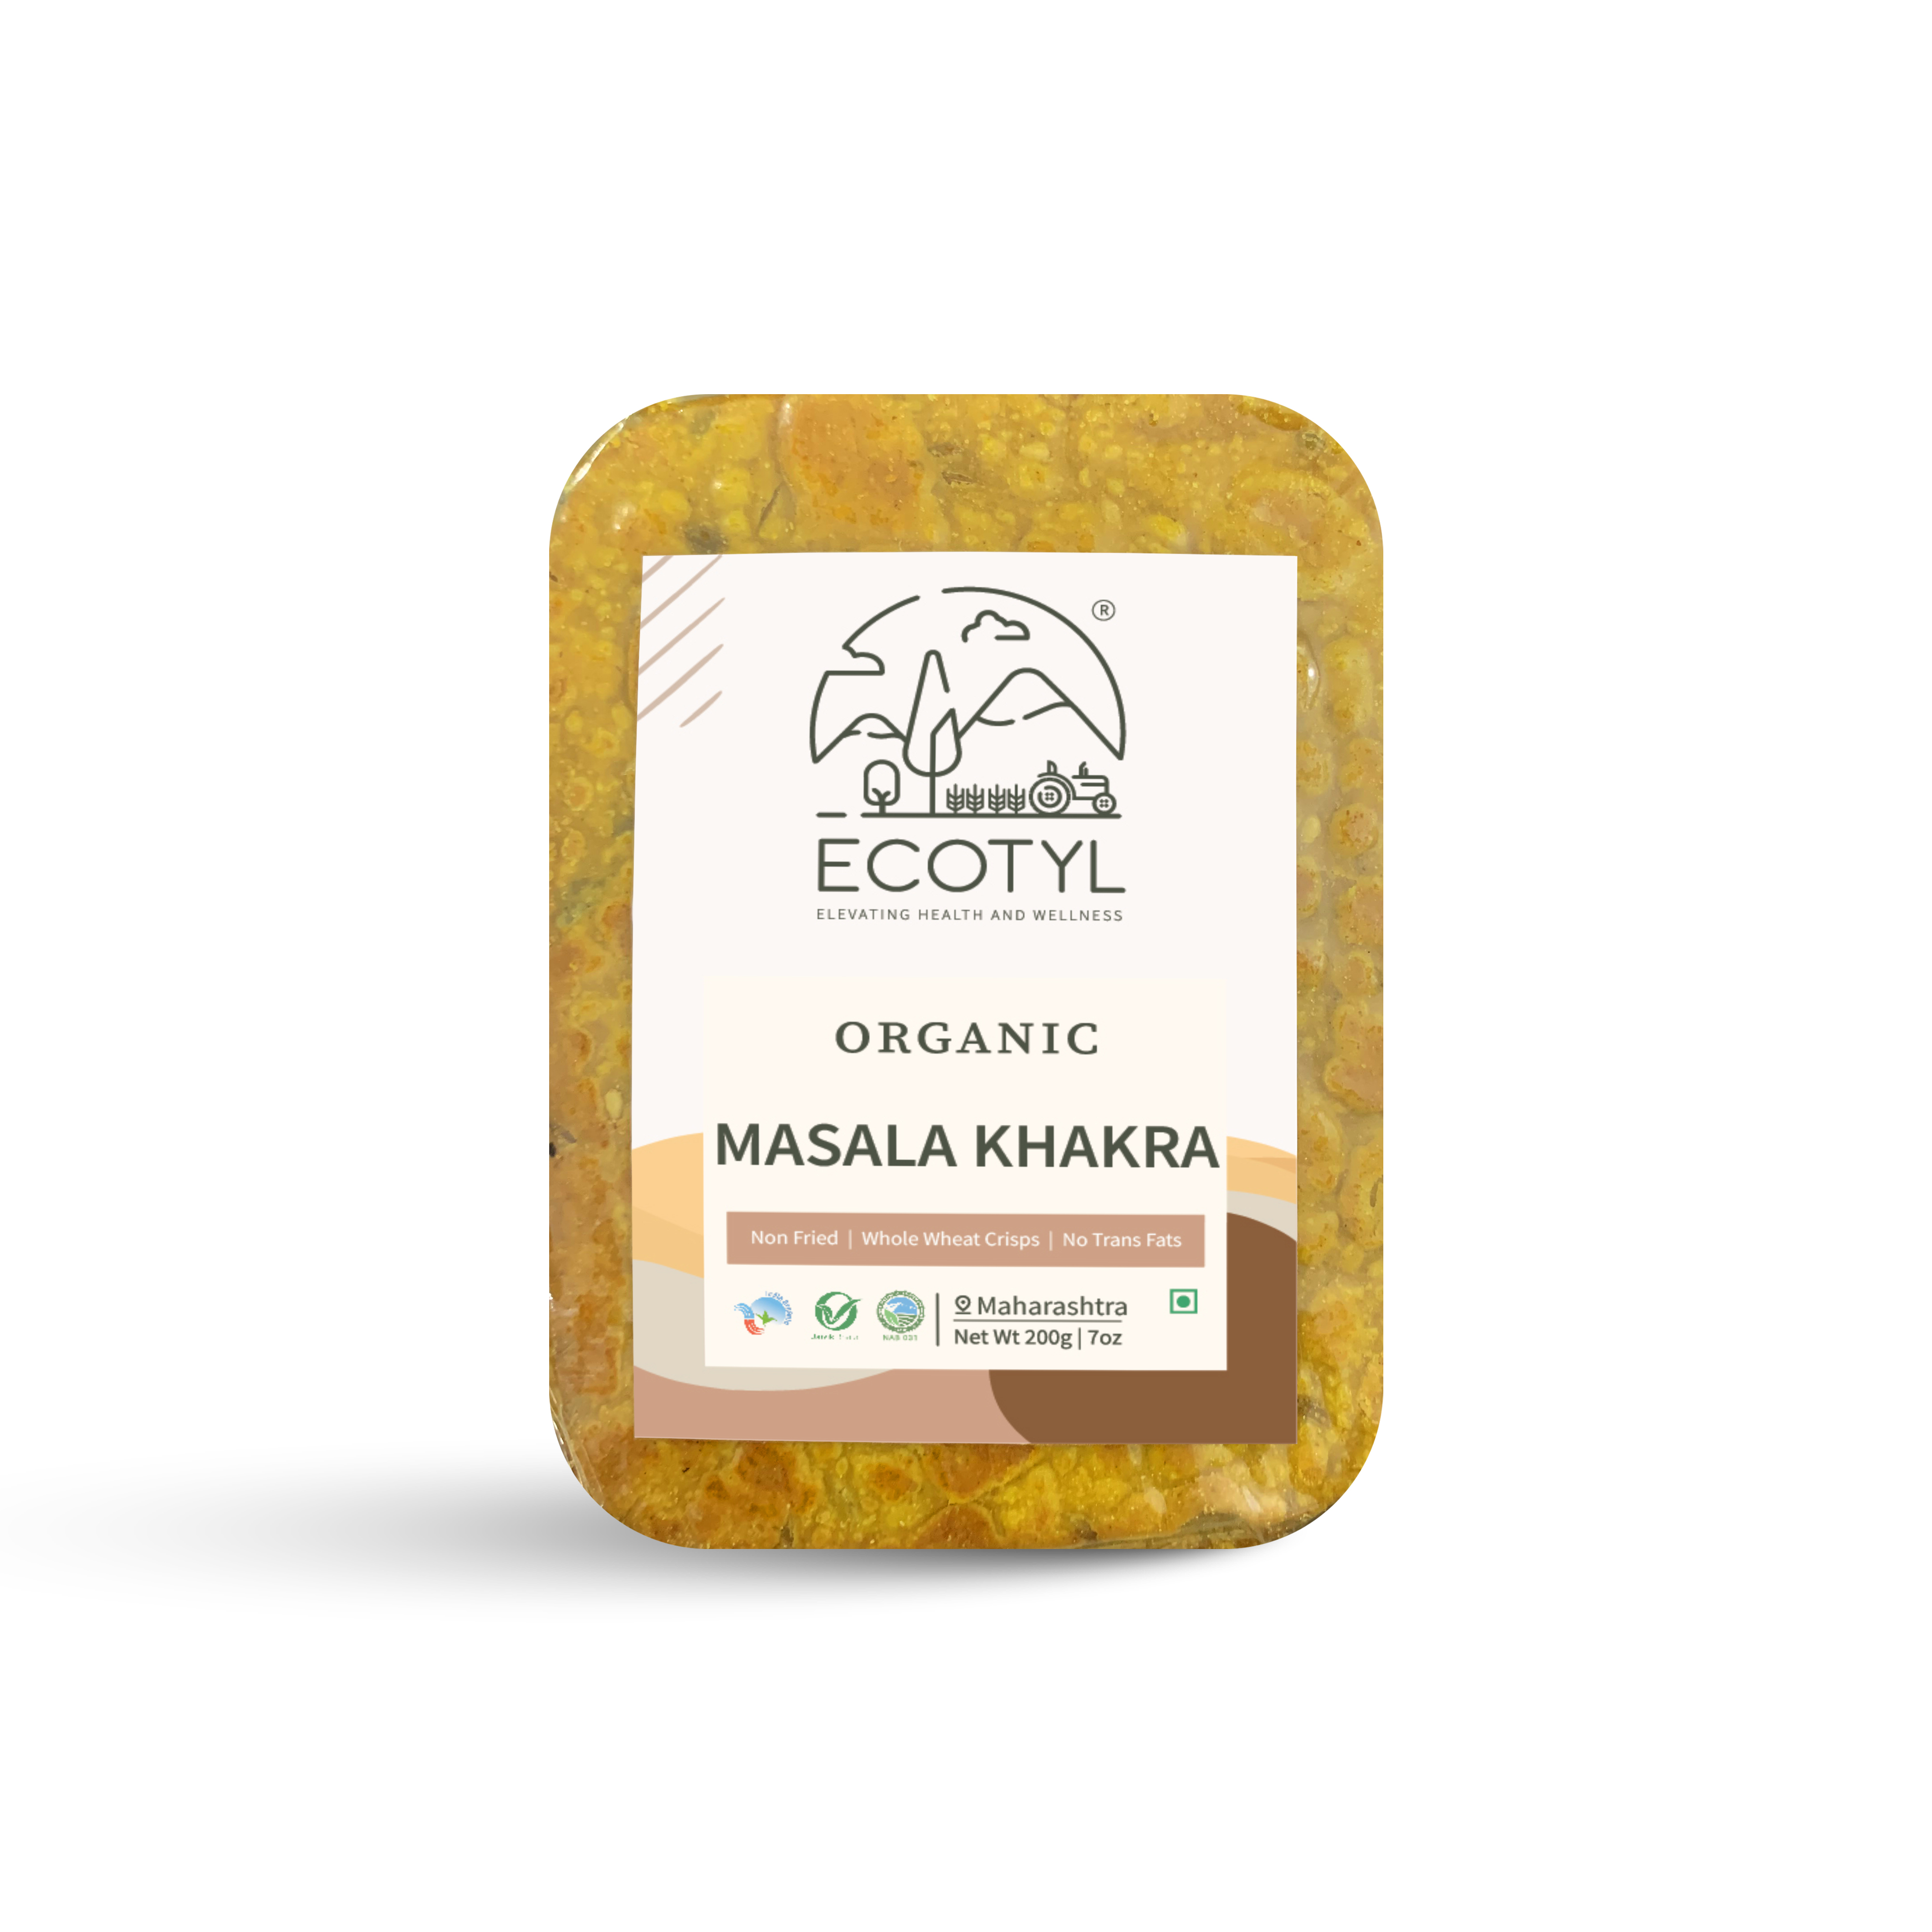 Buy Ecotyl Organic Masala Khakra - 200 g at Best Price Online